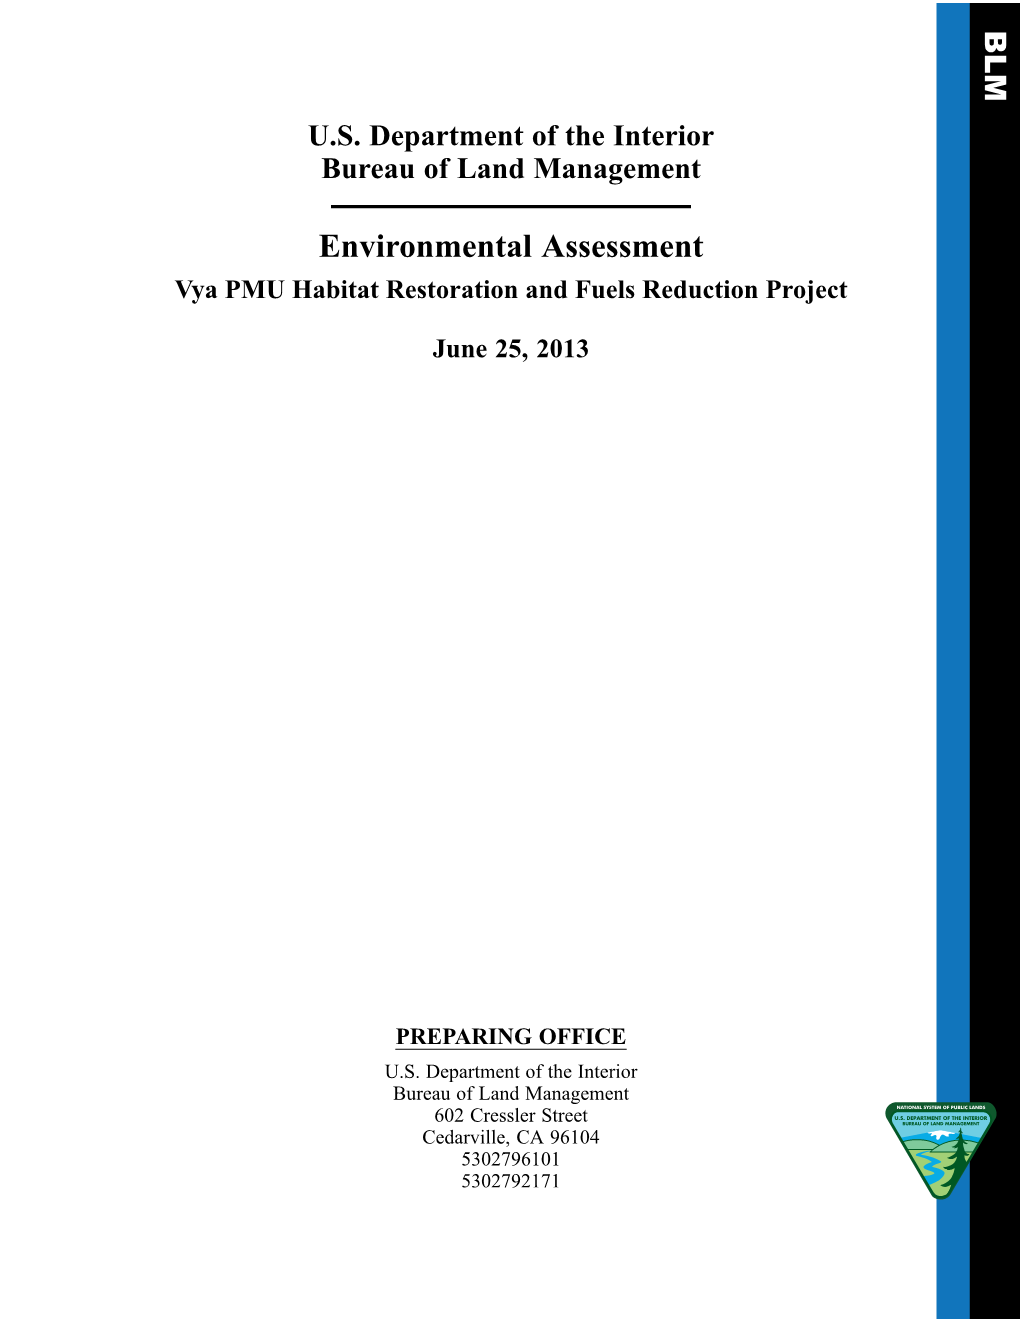 Environmental Assessment Vya PMU Habitat Restoration and Fuels Reduction Project